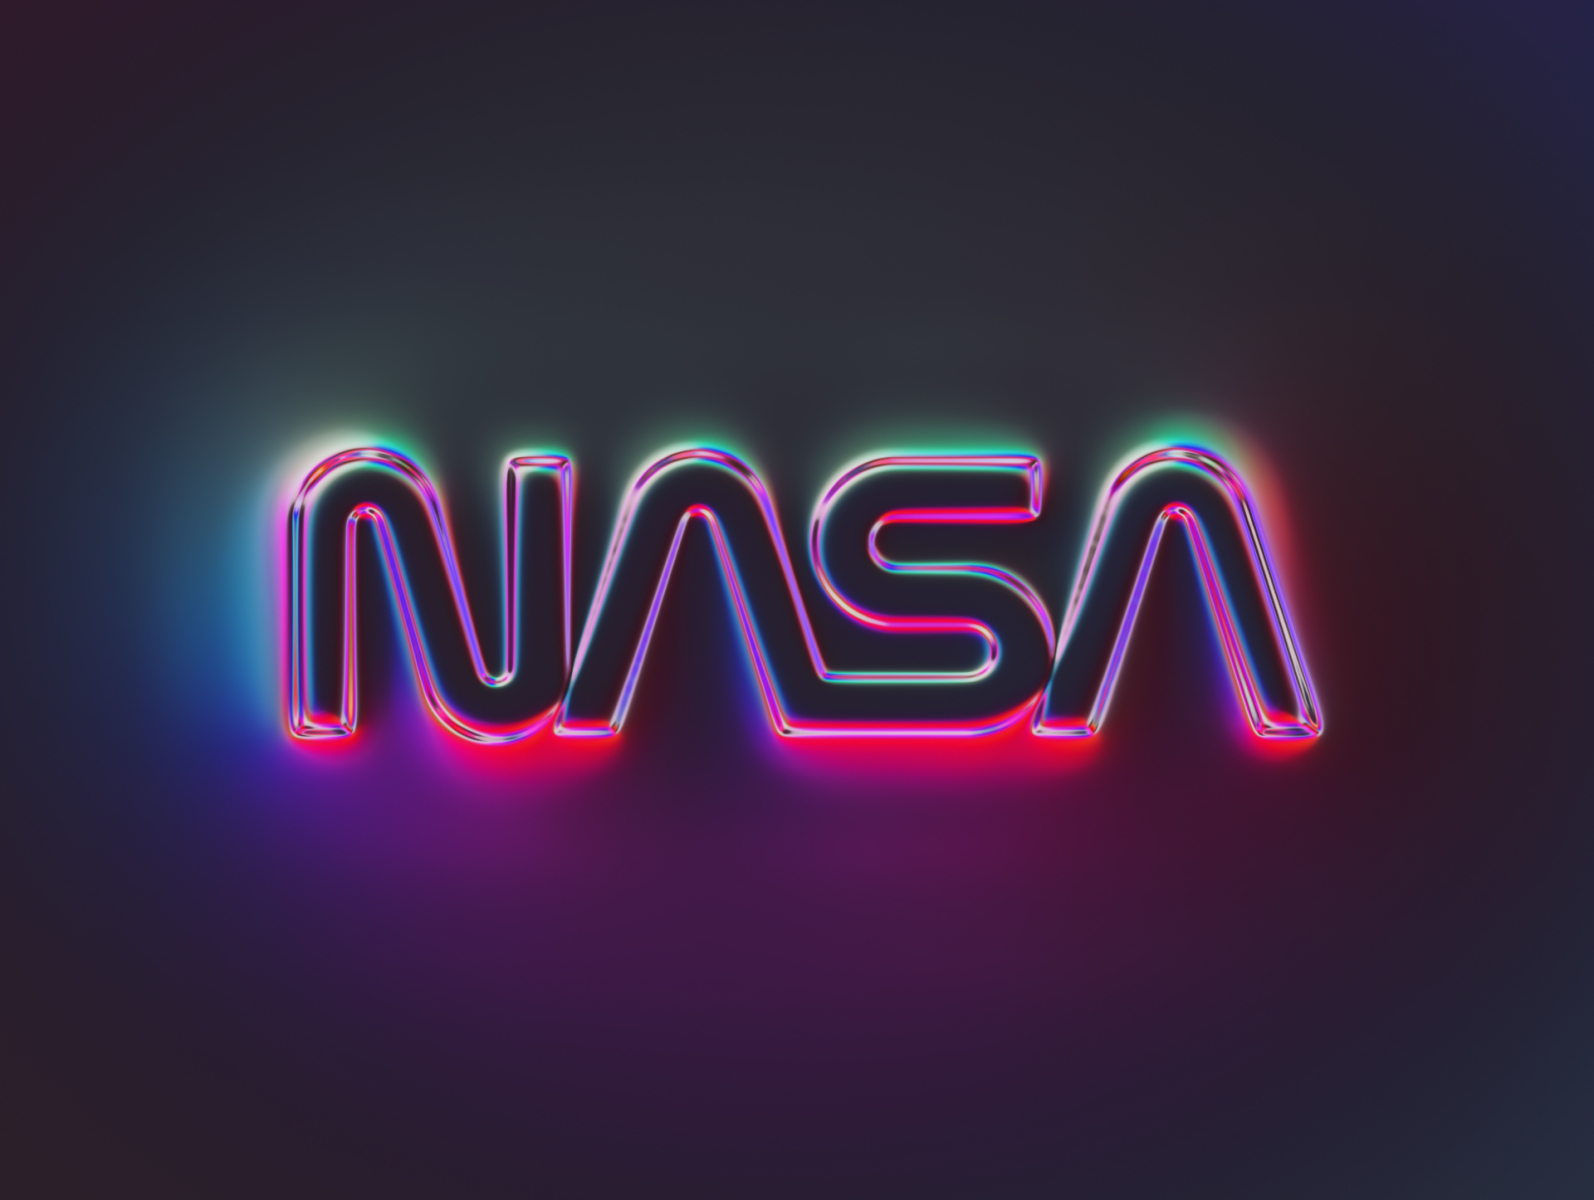 36 logos - NASA by Martin Naumann on Dribbble